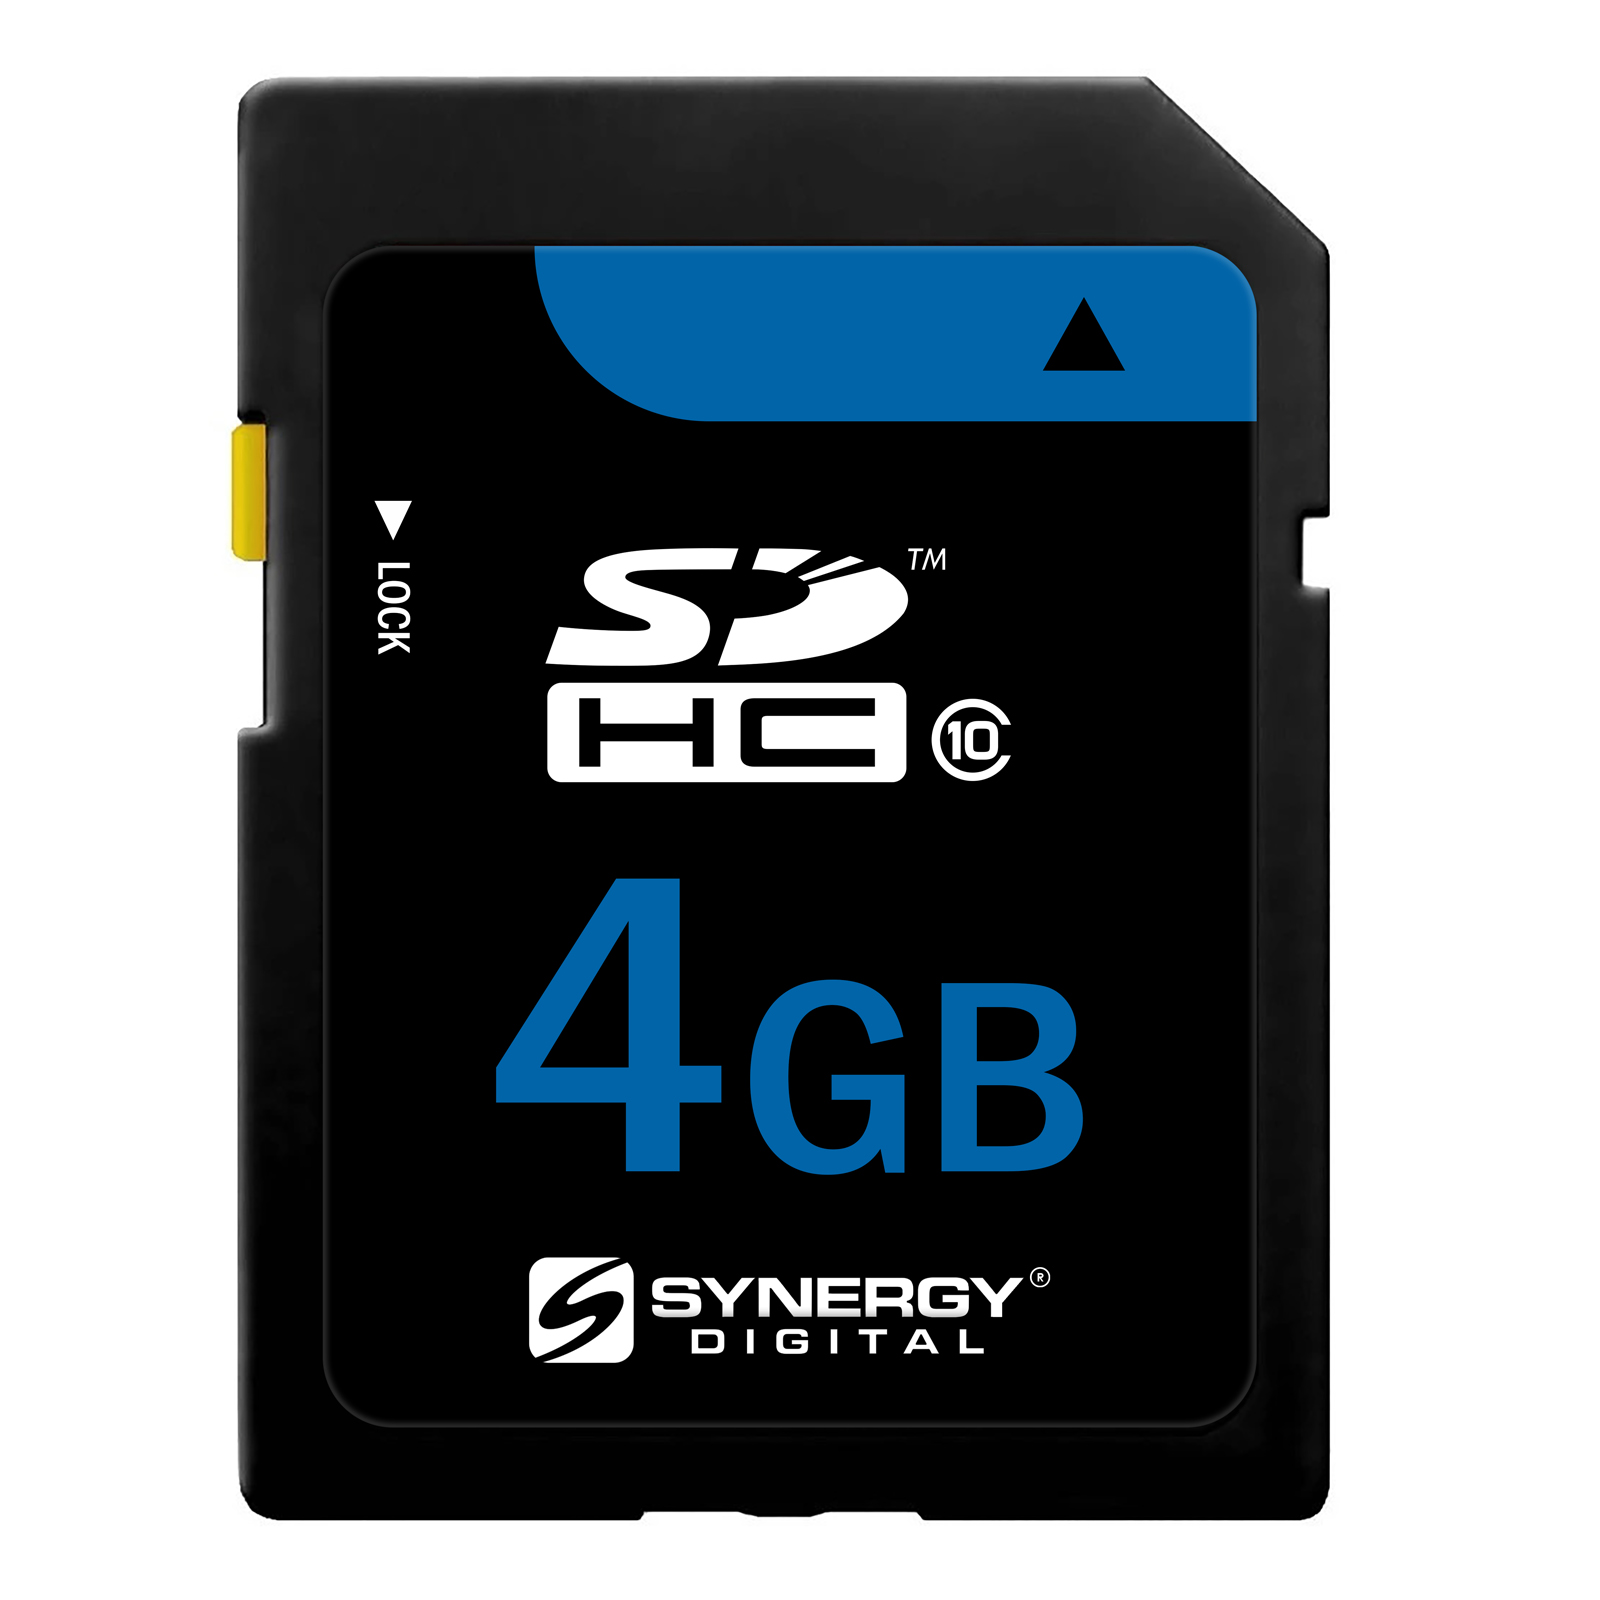 4GB Secure Digital High Capacity (SDHC) Memory Card